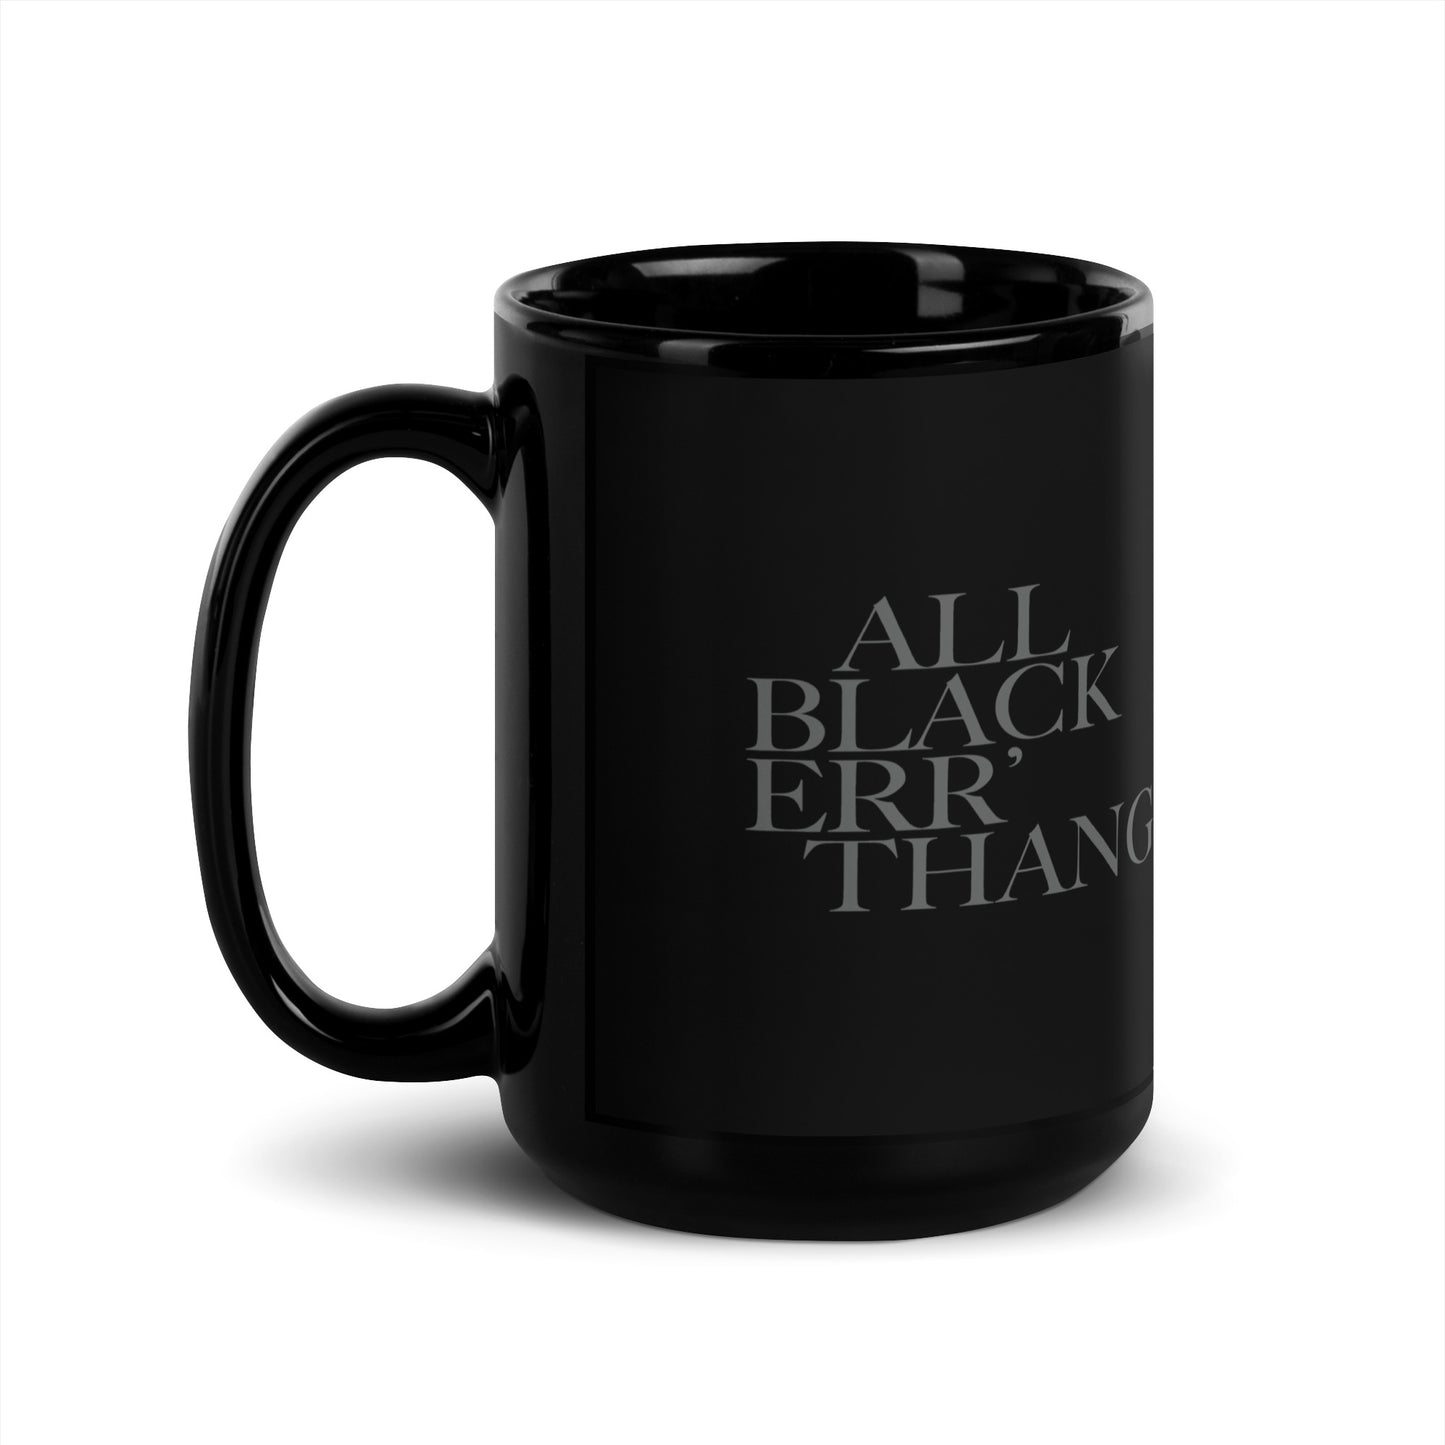 All Black Err'thang Mug